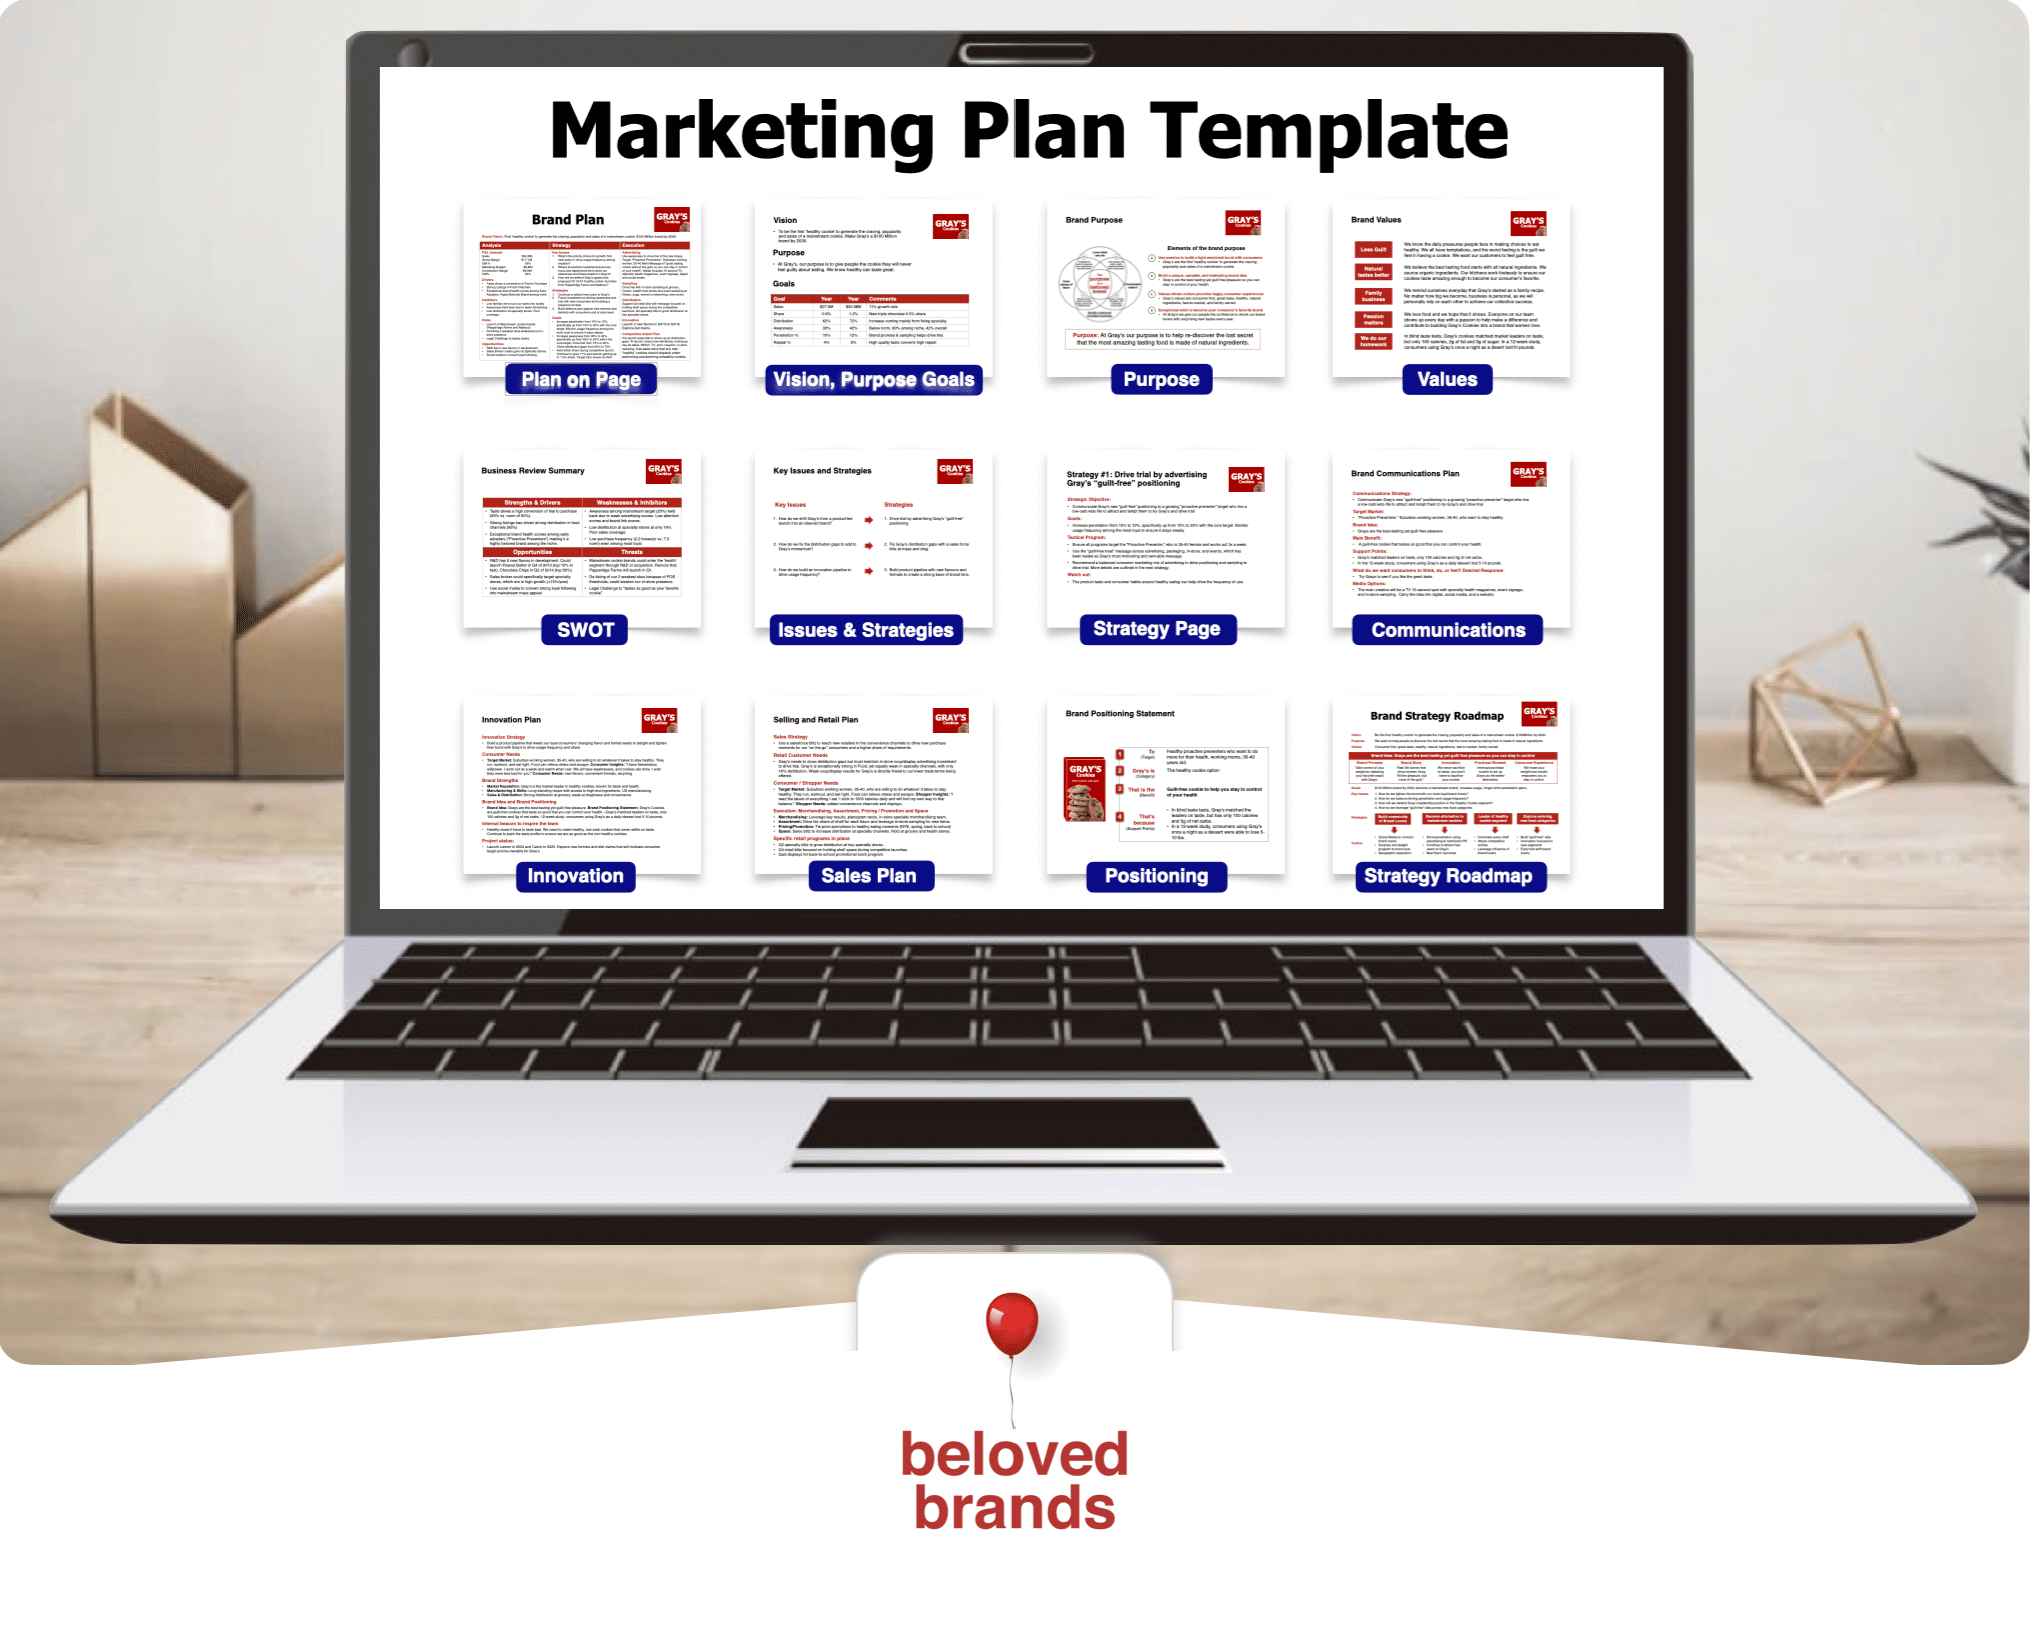 Marketing Plan Template example